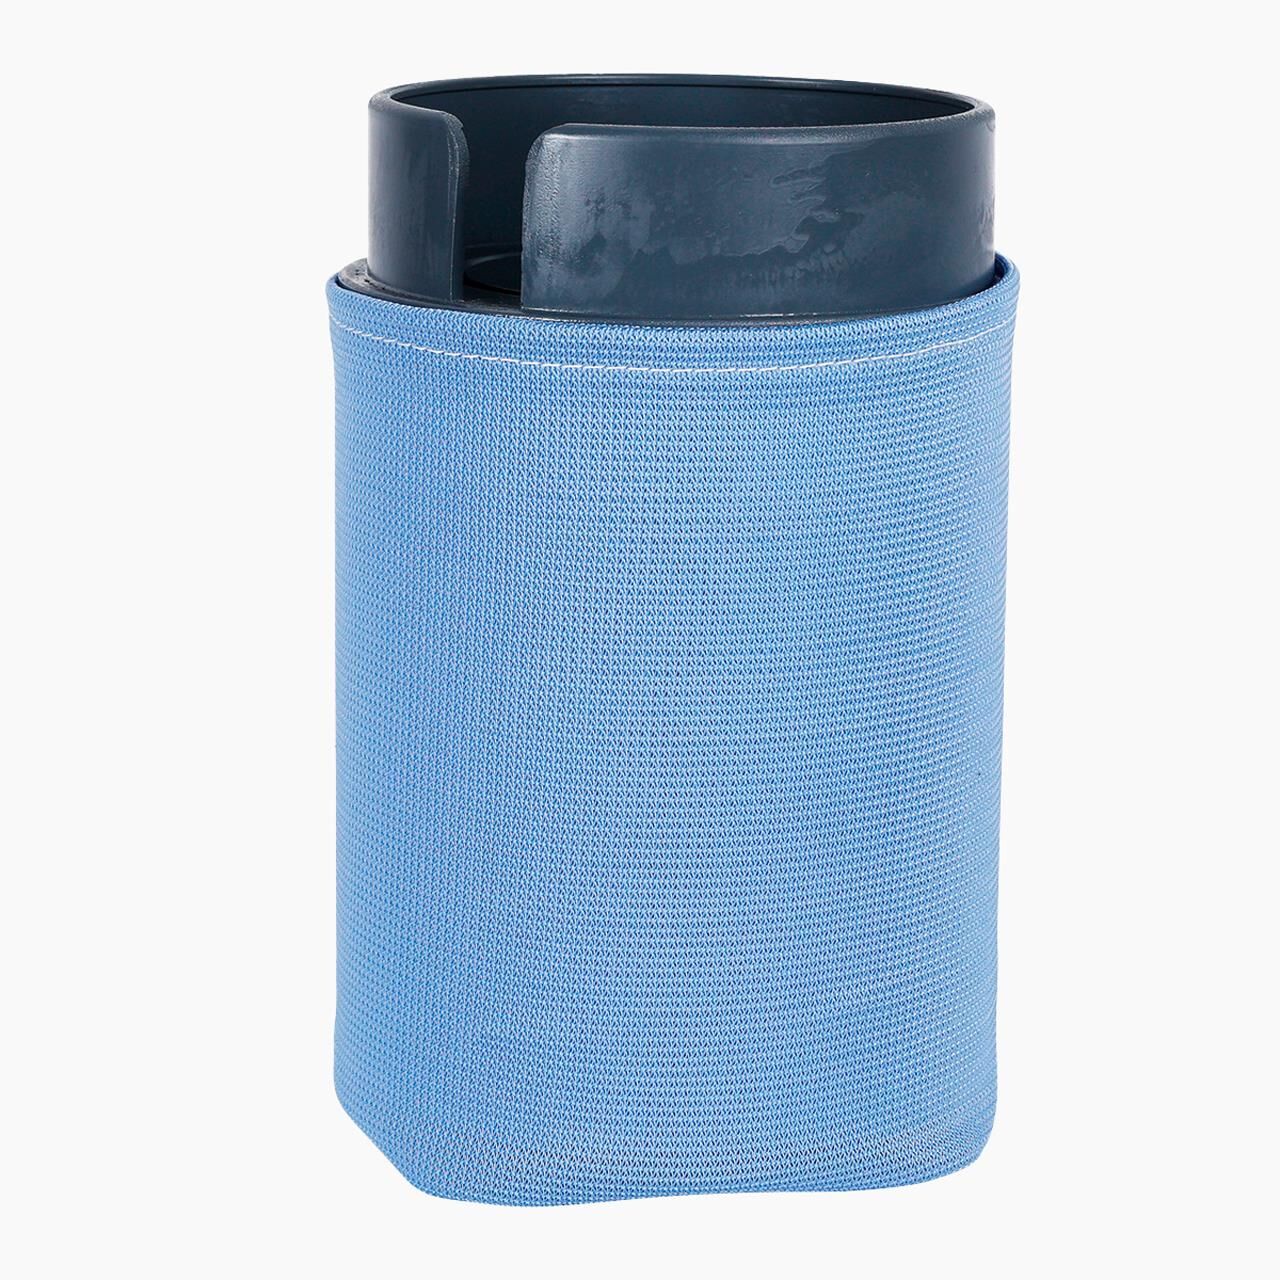 Filterüberzug für Sofub Wirlpools - 22 x 15 cm - blau